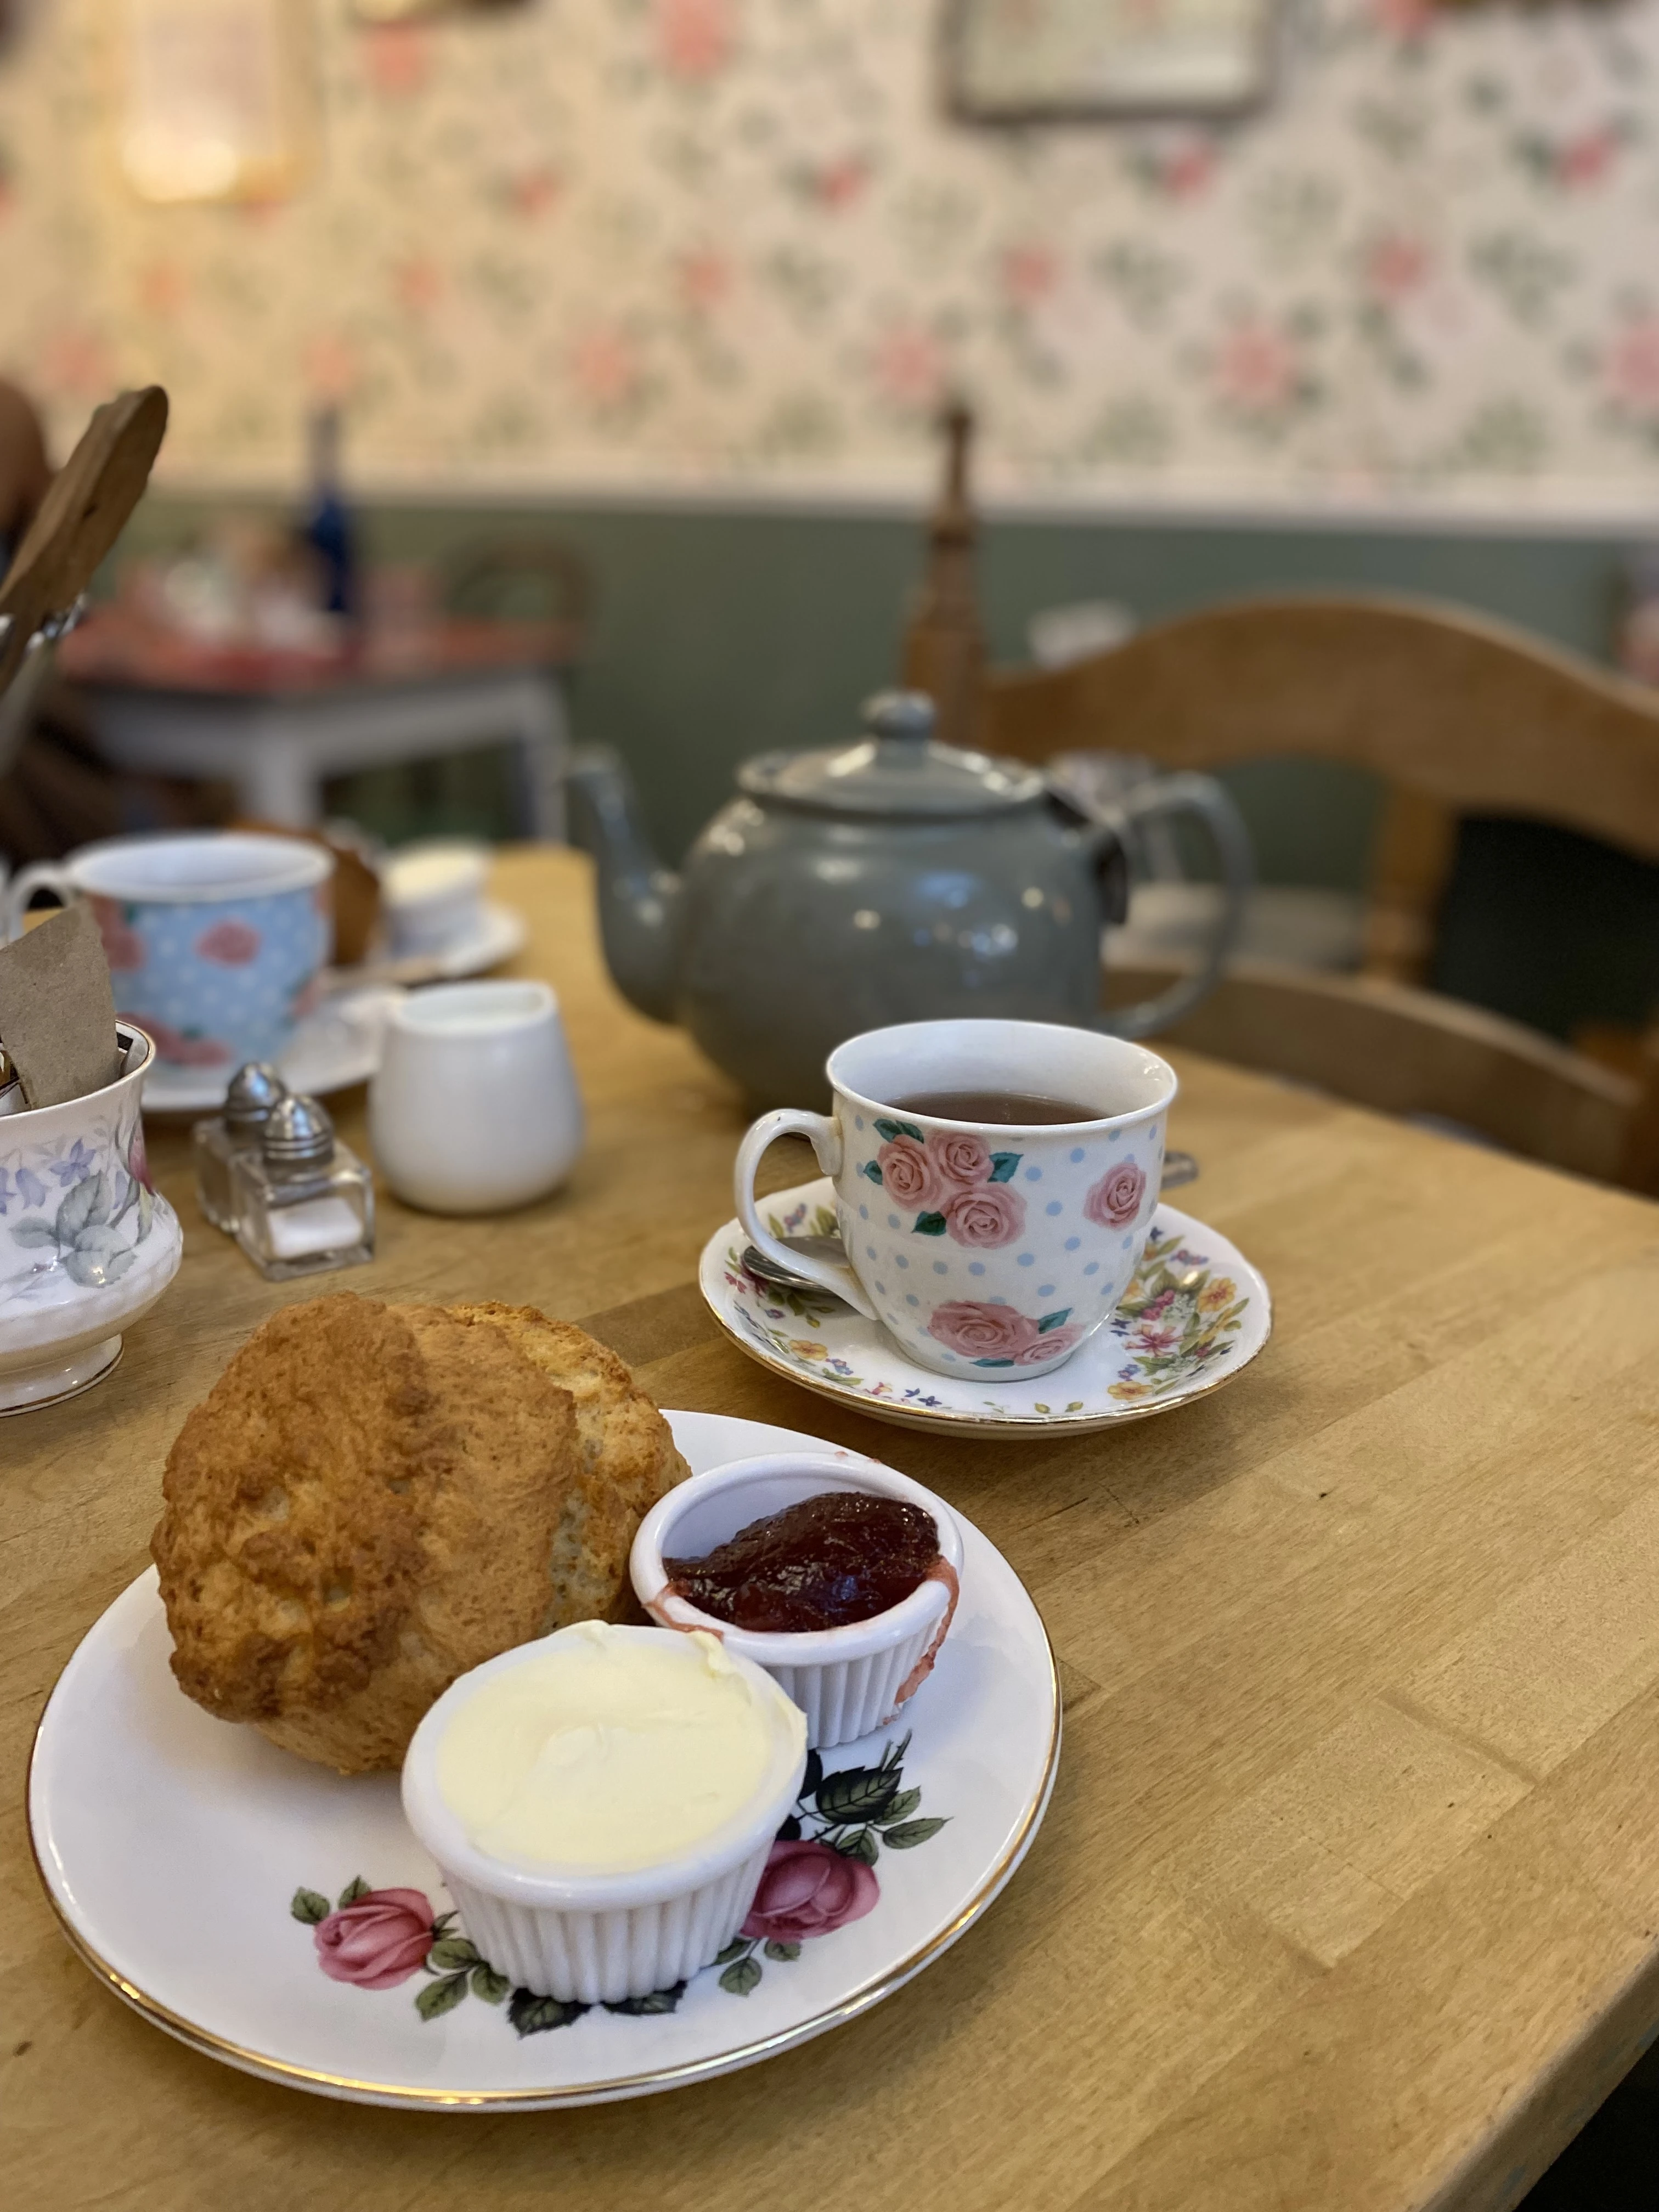 「The ENGLISH ROSE CAFE &amp;TEA SHOP」のスコーンと紅茶